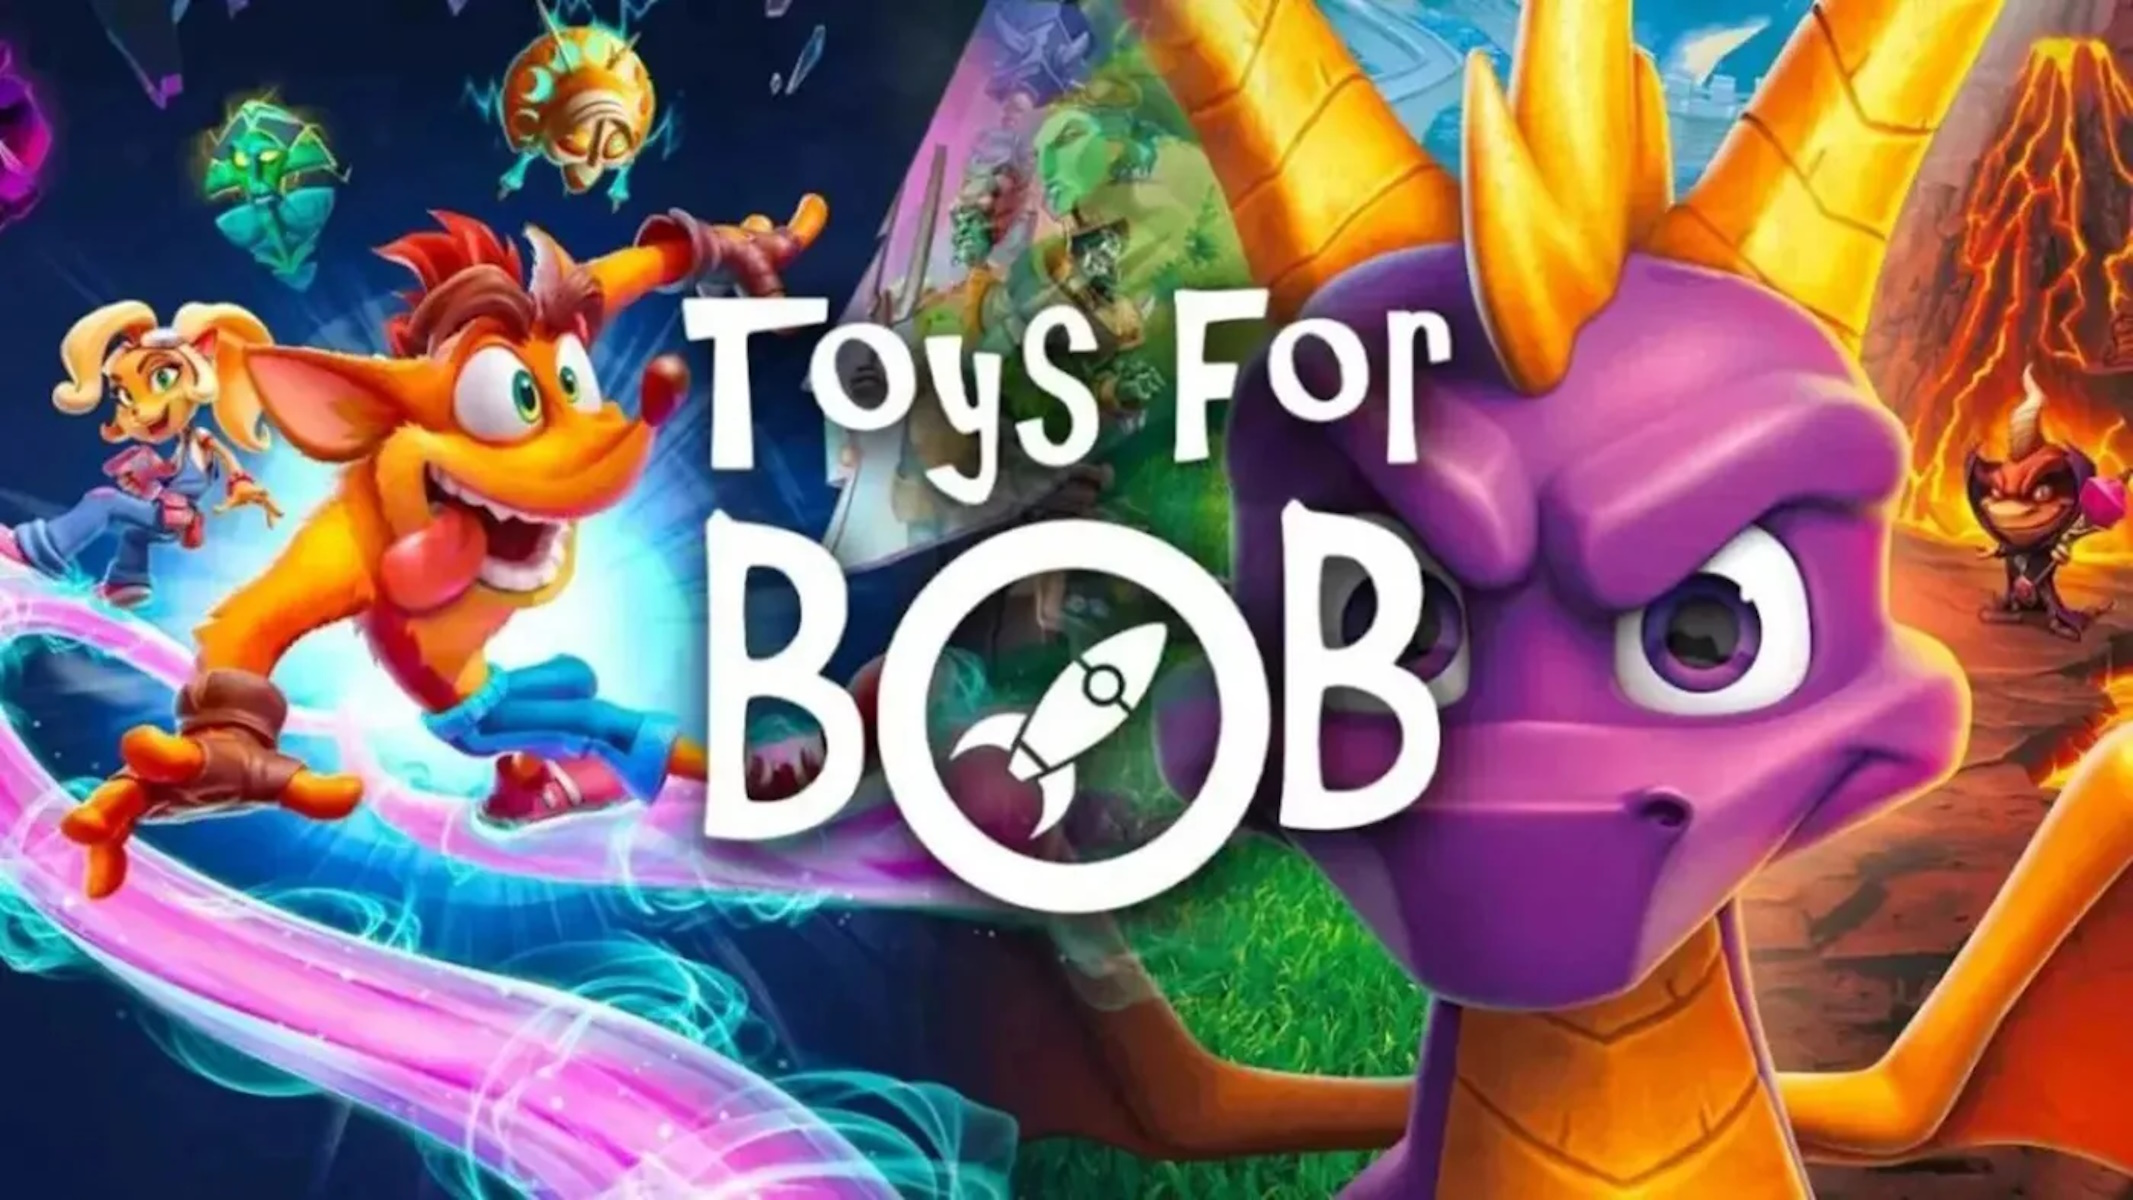 Toys For Bob, studio dietro Crash Bandicoot e Spyro